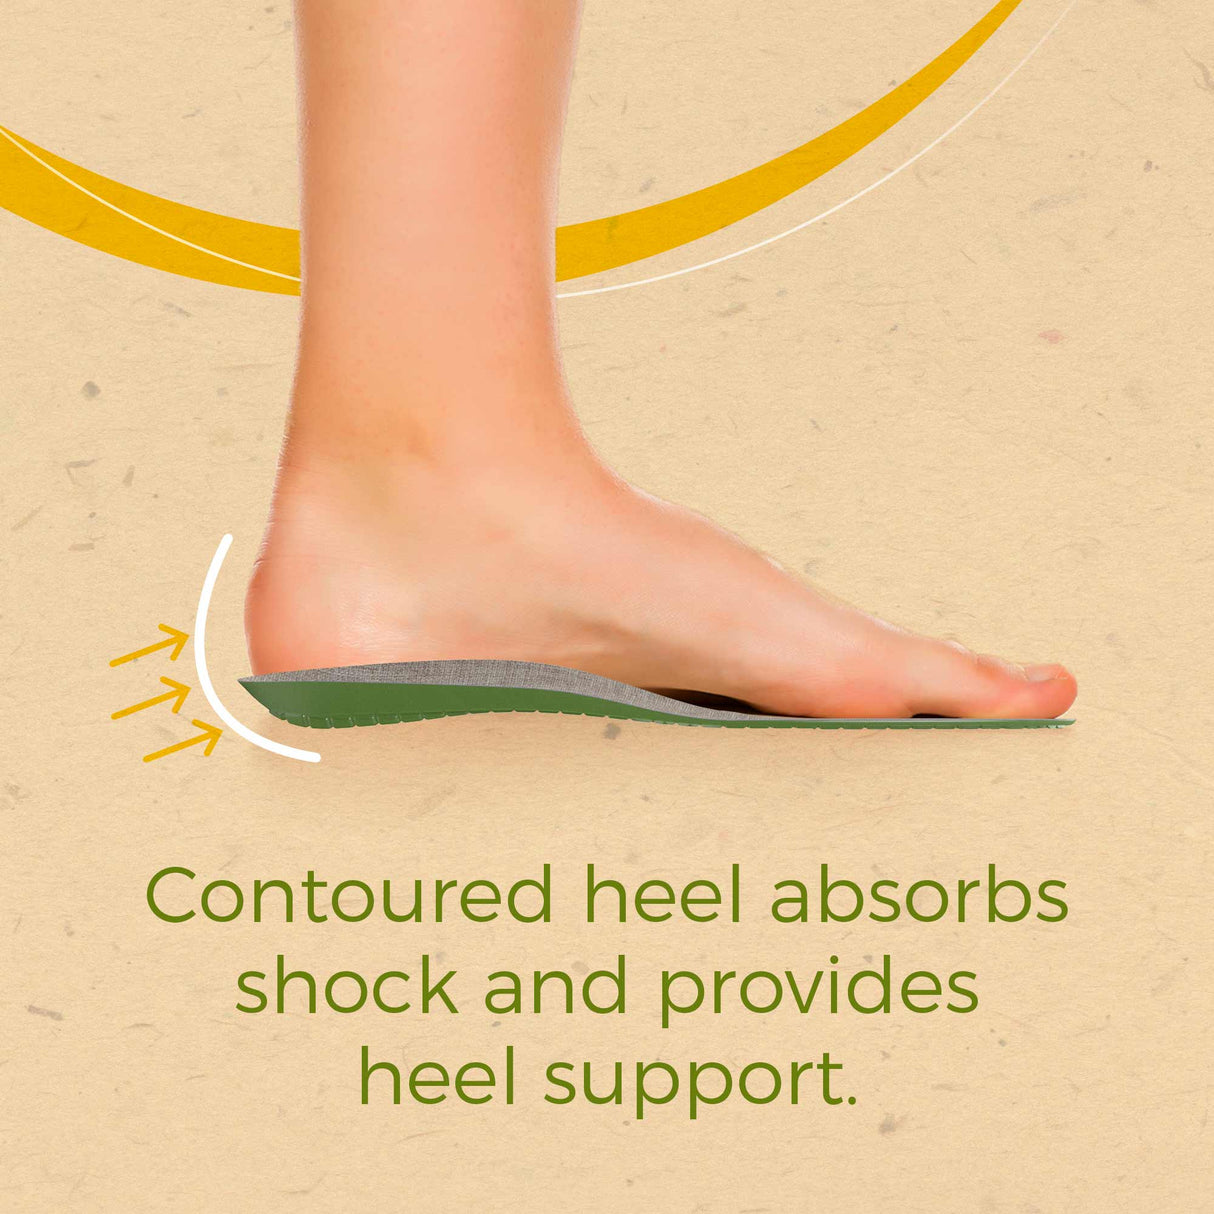 eco foam insoles contours your heel